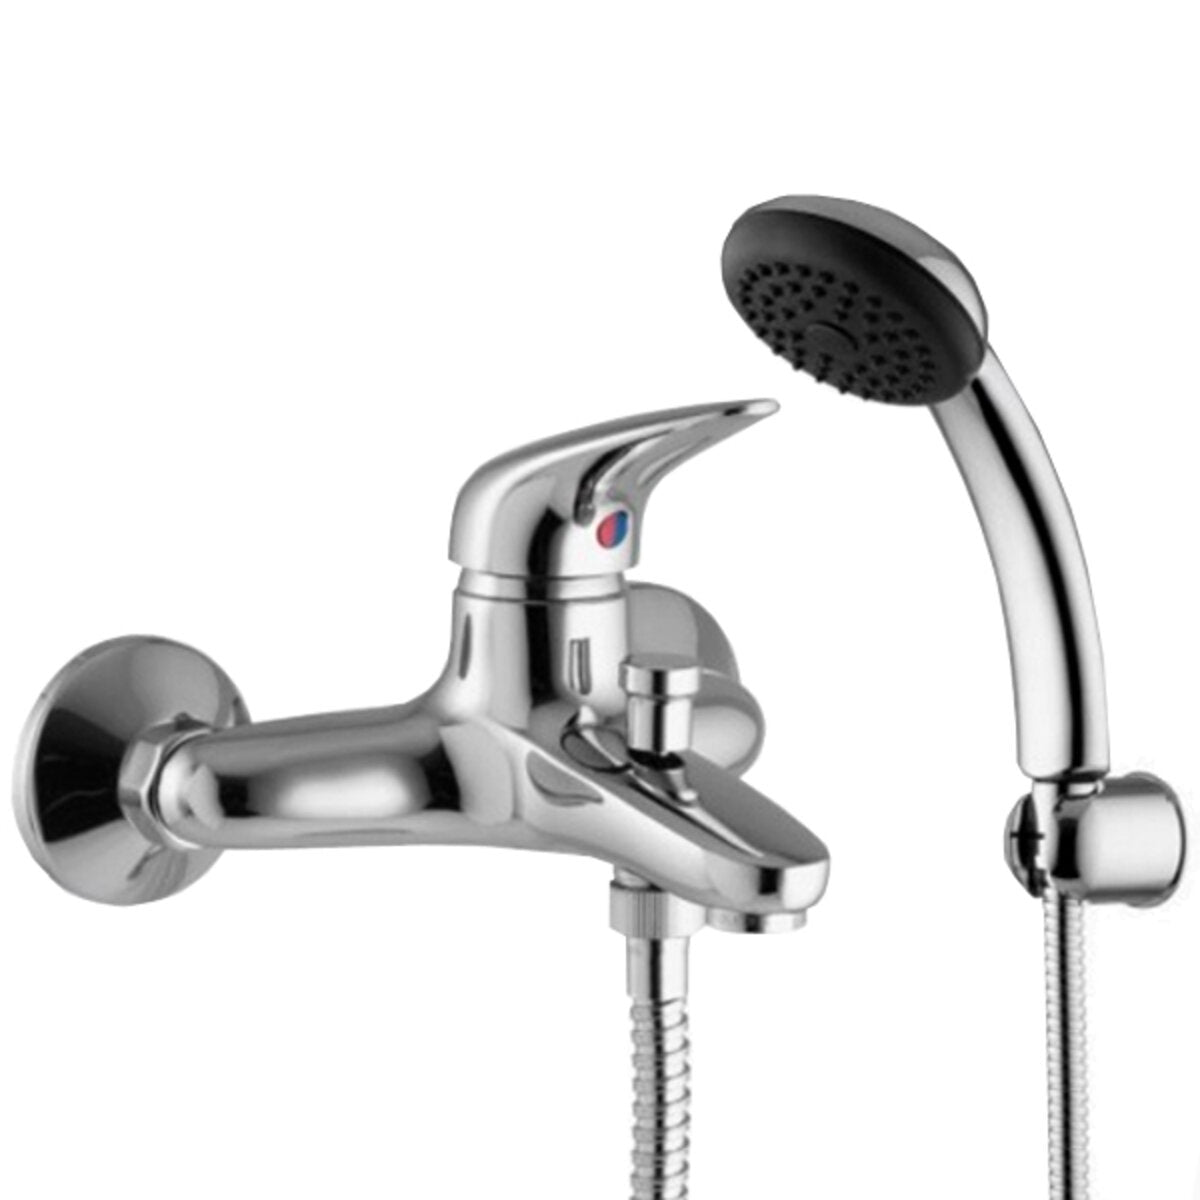 Fima Carlo Frattini series 18 bath mixer external two-way diverter with shower set